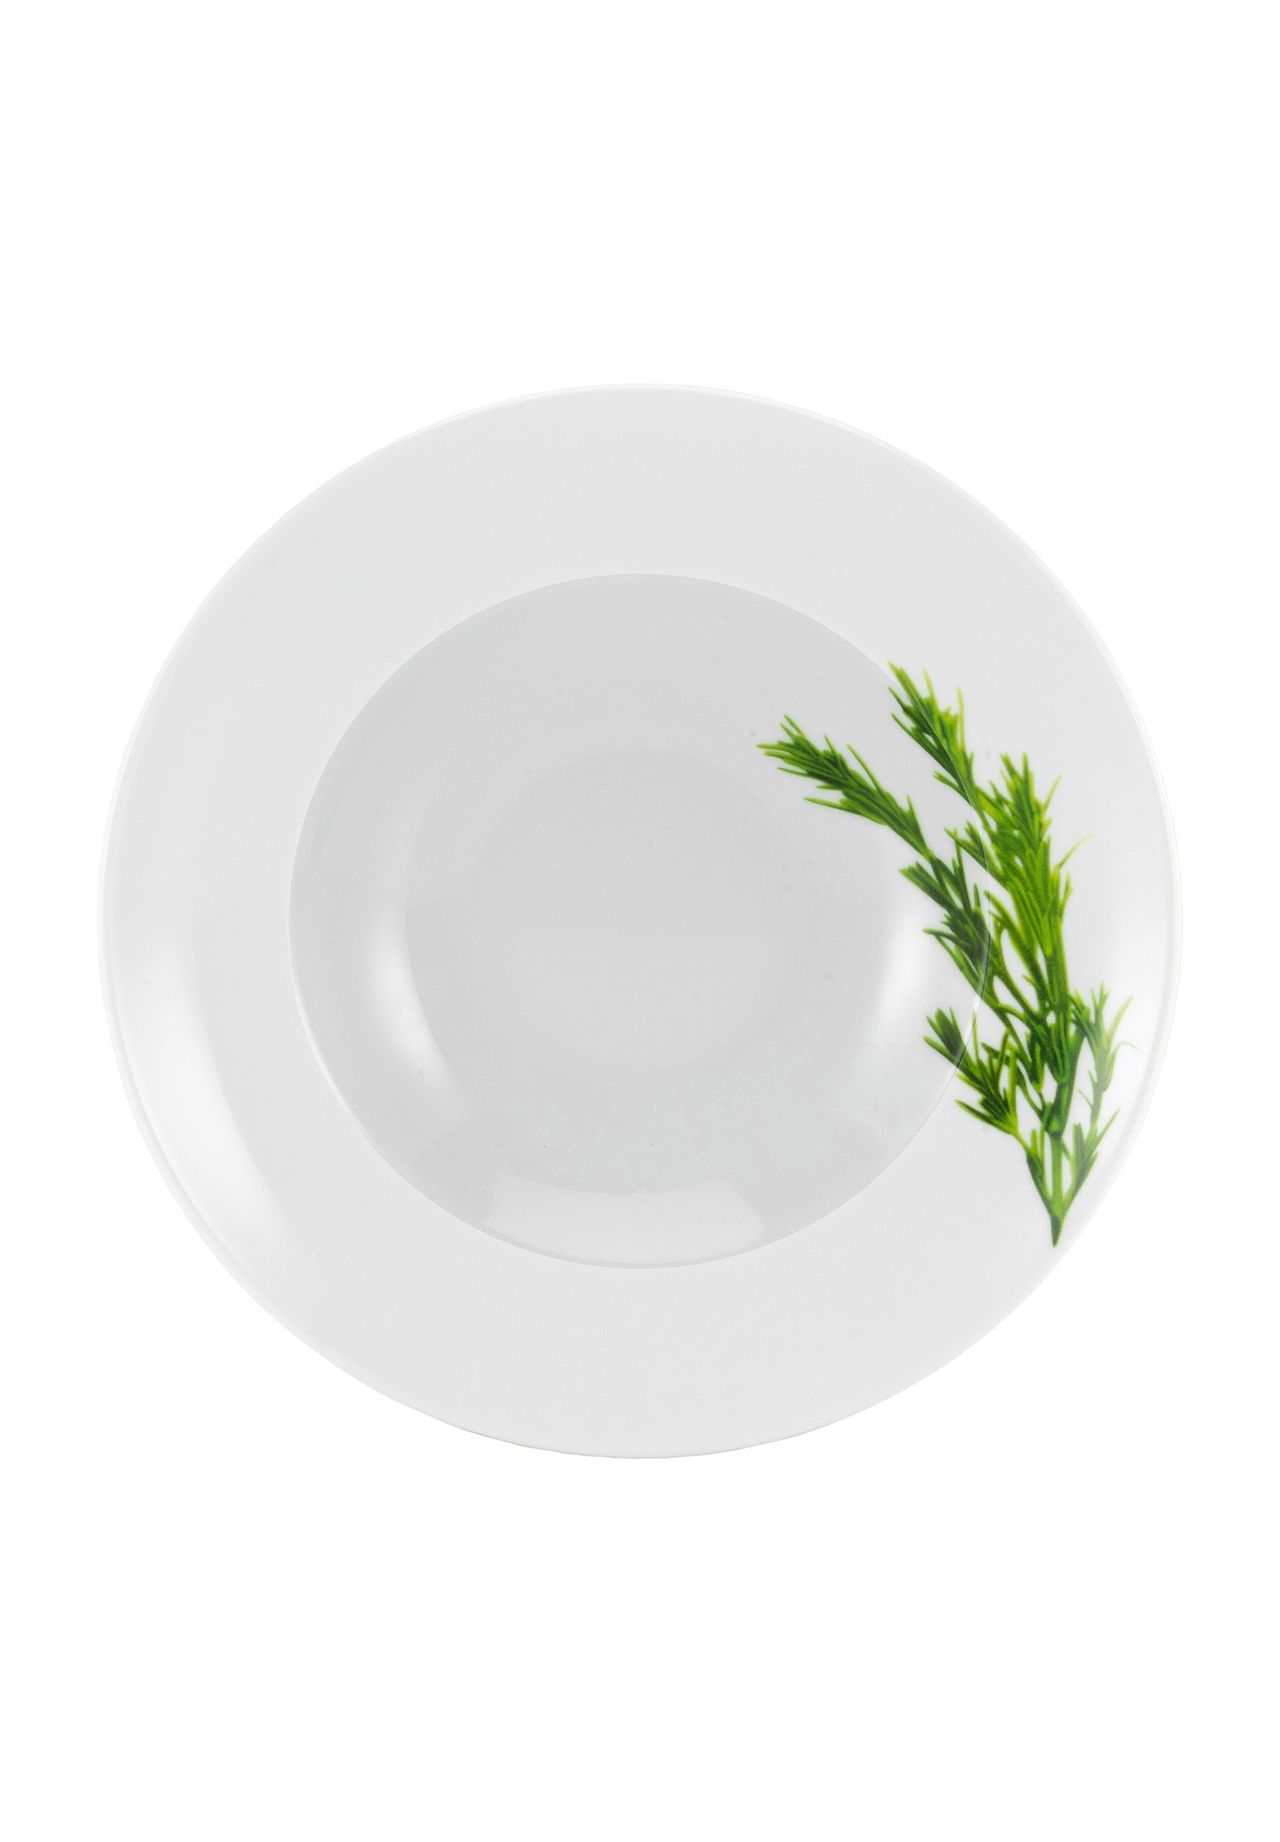 Küche & Haushalt Tischkultur CreaTable Pastateller Rosmarin, Ø 27 cm